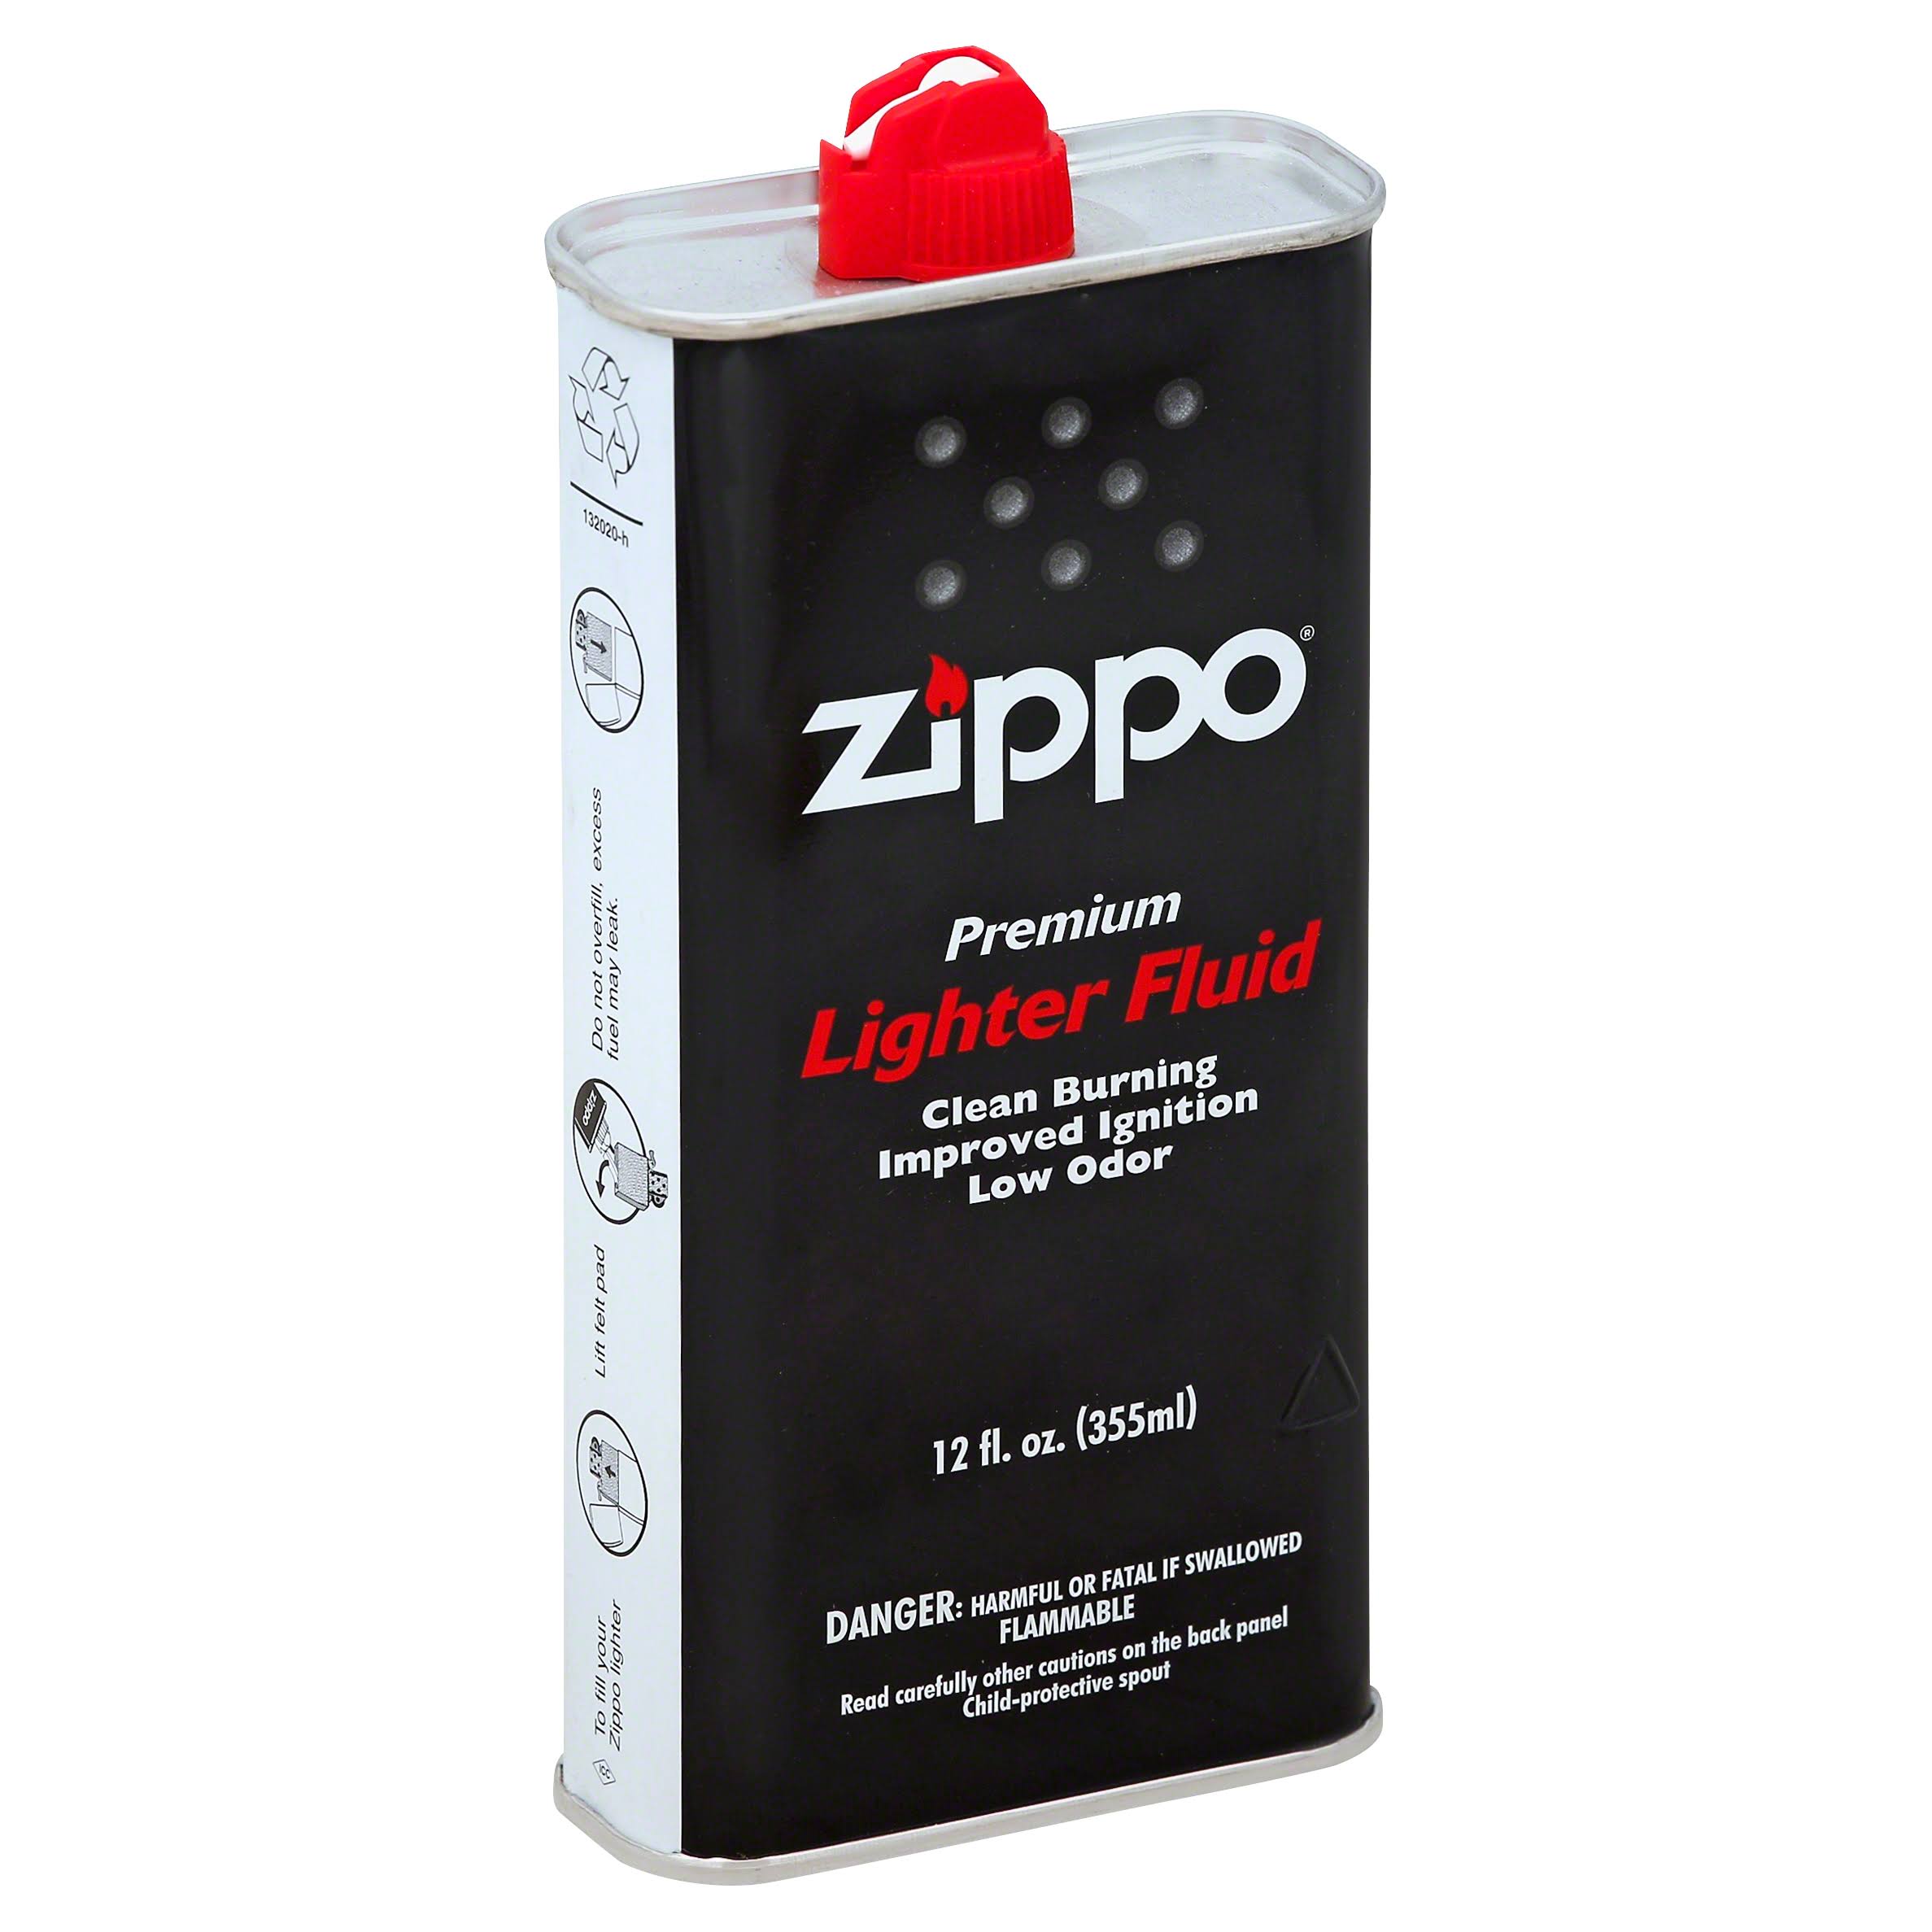 Zippo Lighter Fluid, Premium - 12 fl oz